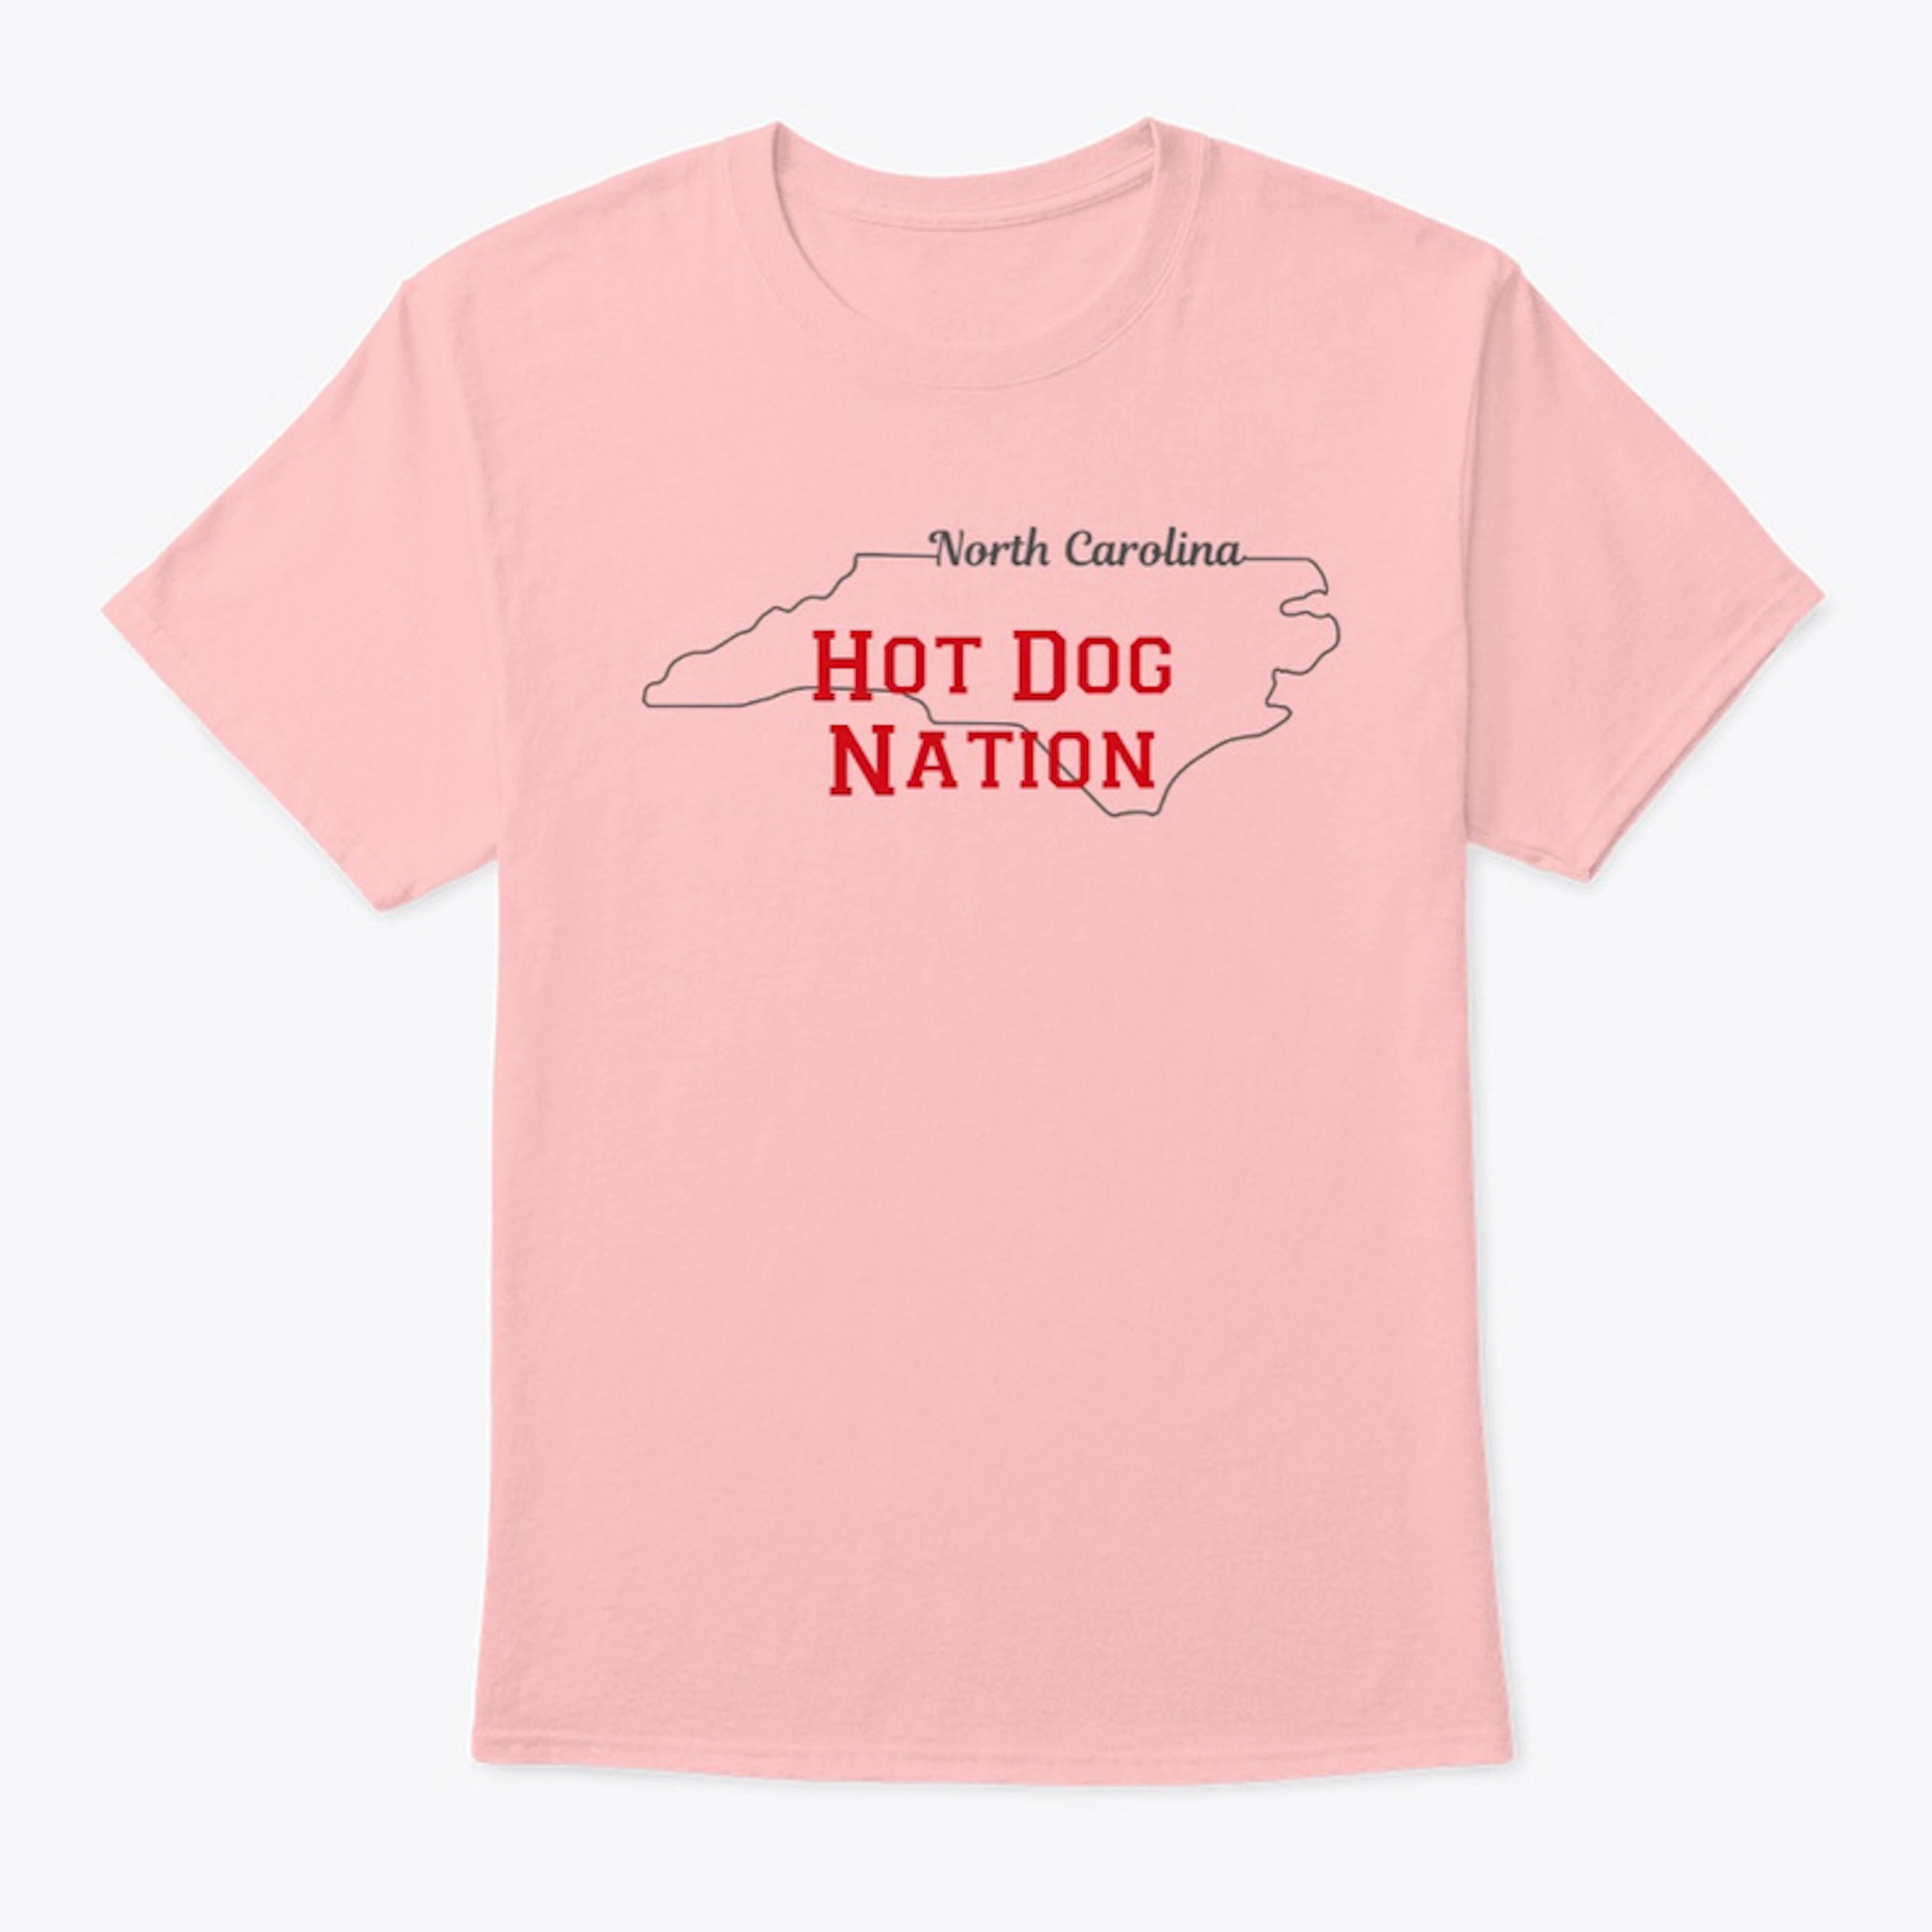 Hot Dog Nation - North Carolina